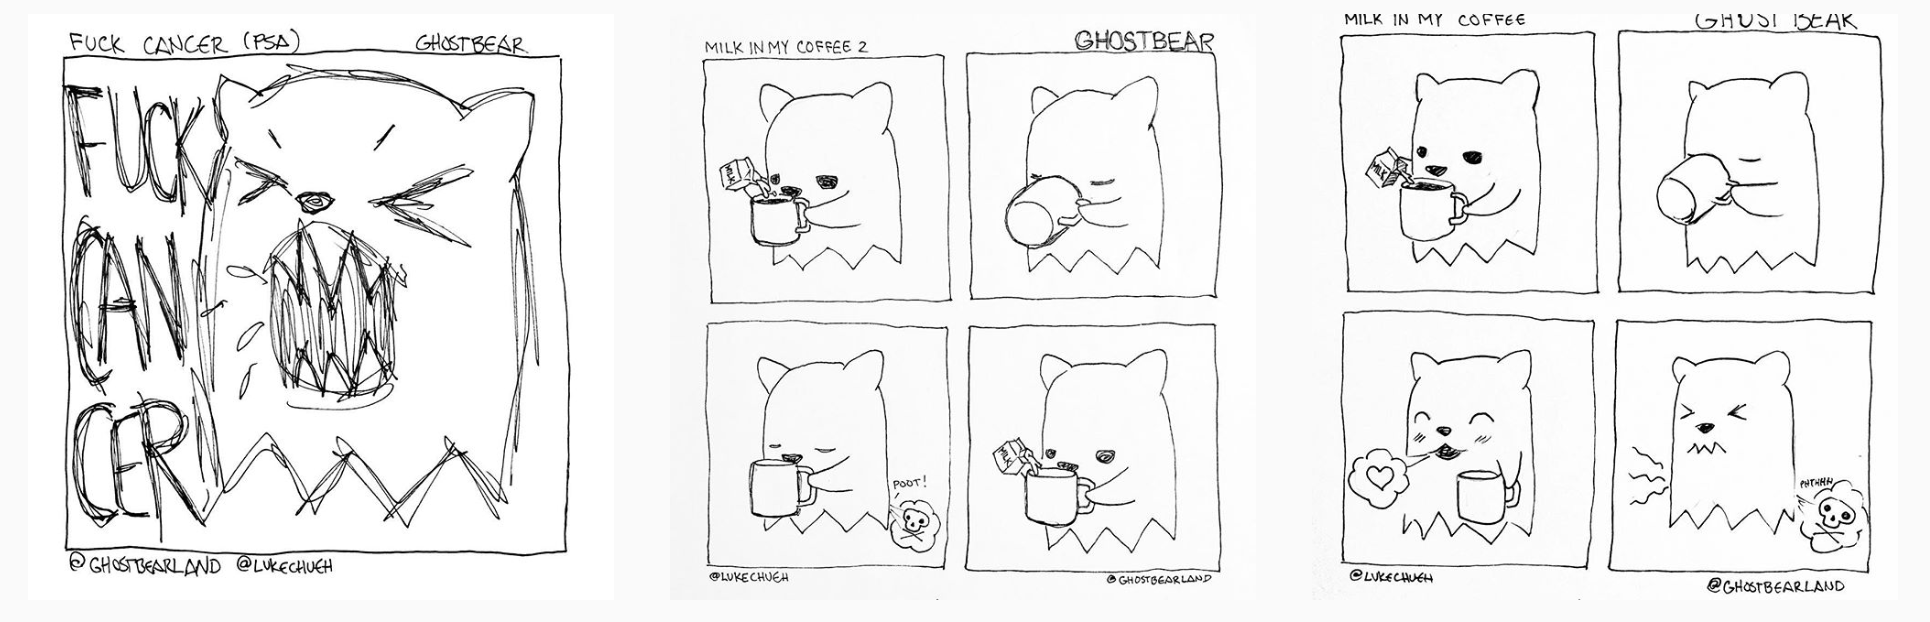 Ghostbear - GID by Luke Chueh